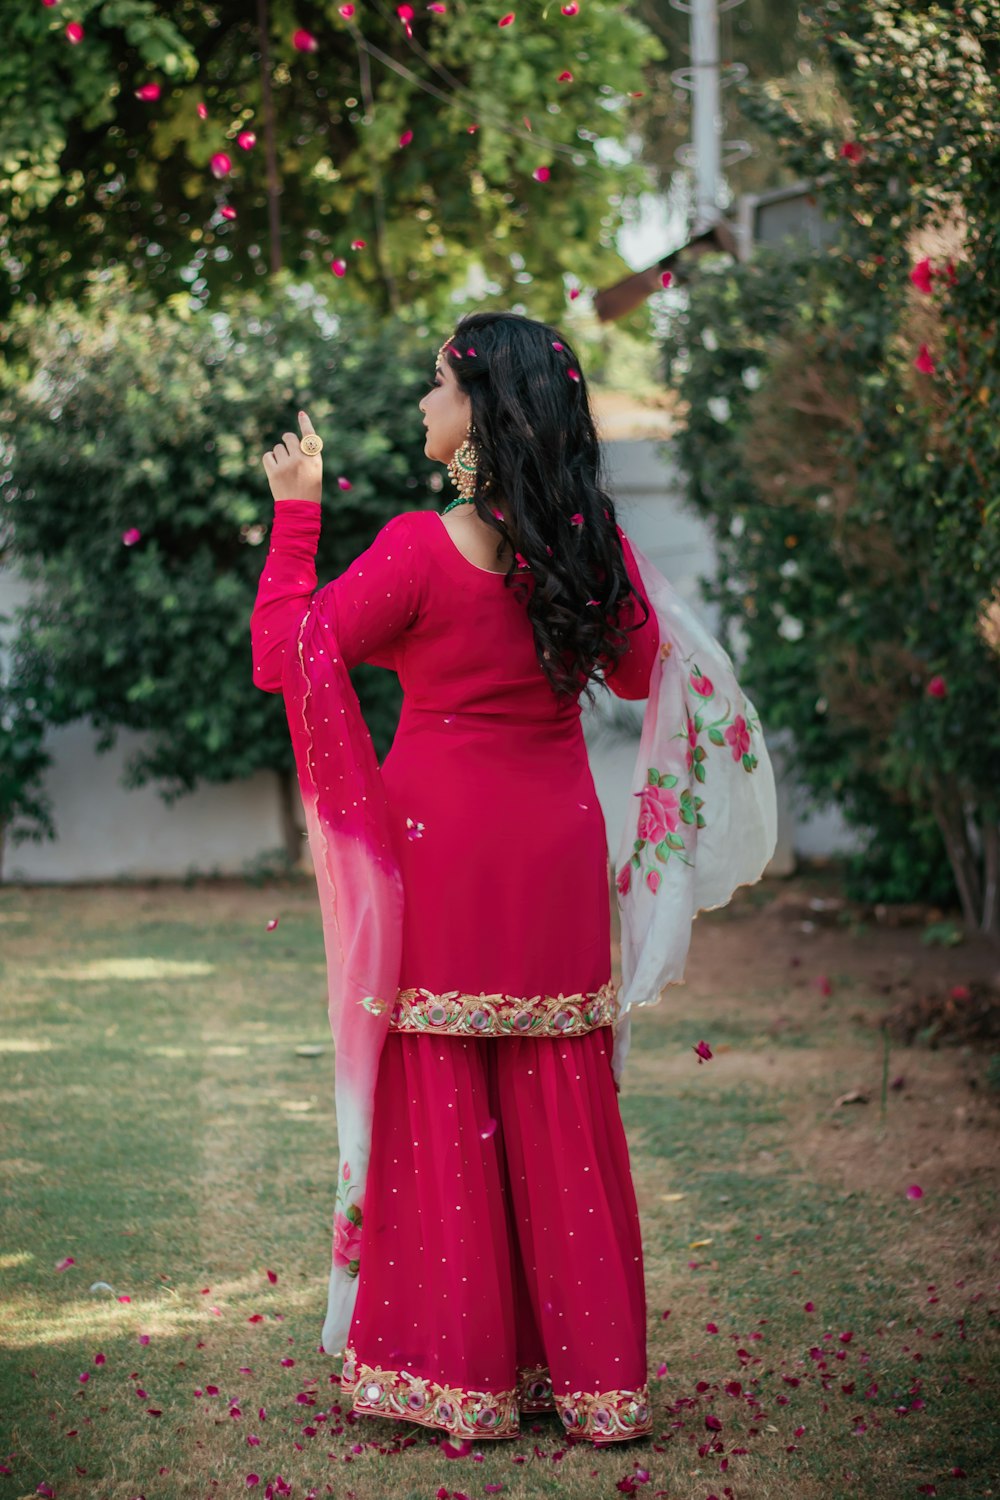 Punjabi Suit Pictures | Download Free Images on Unsplash